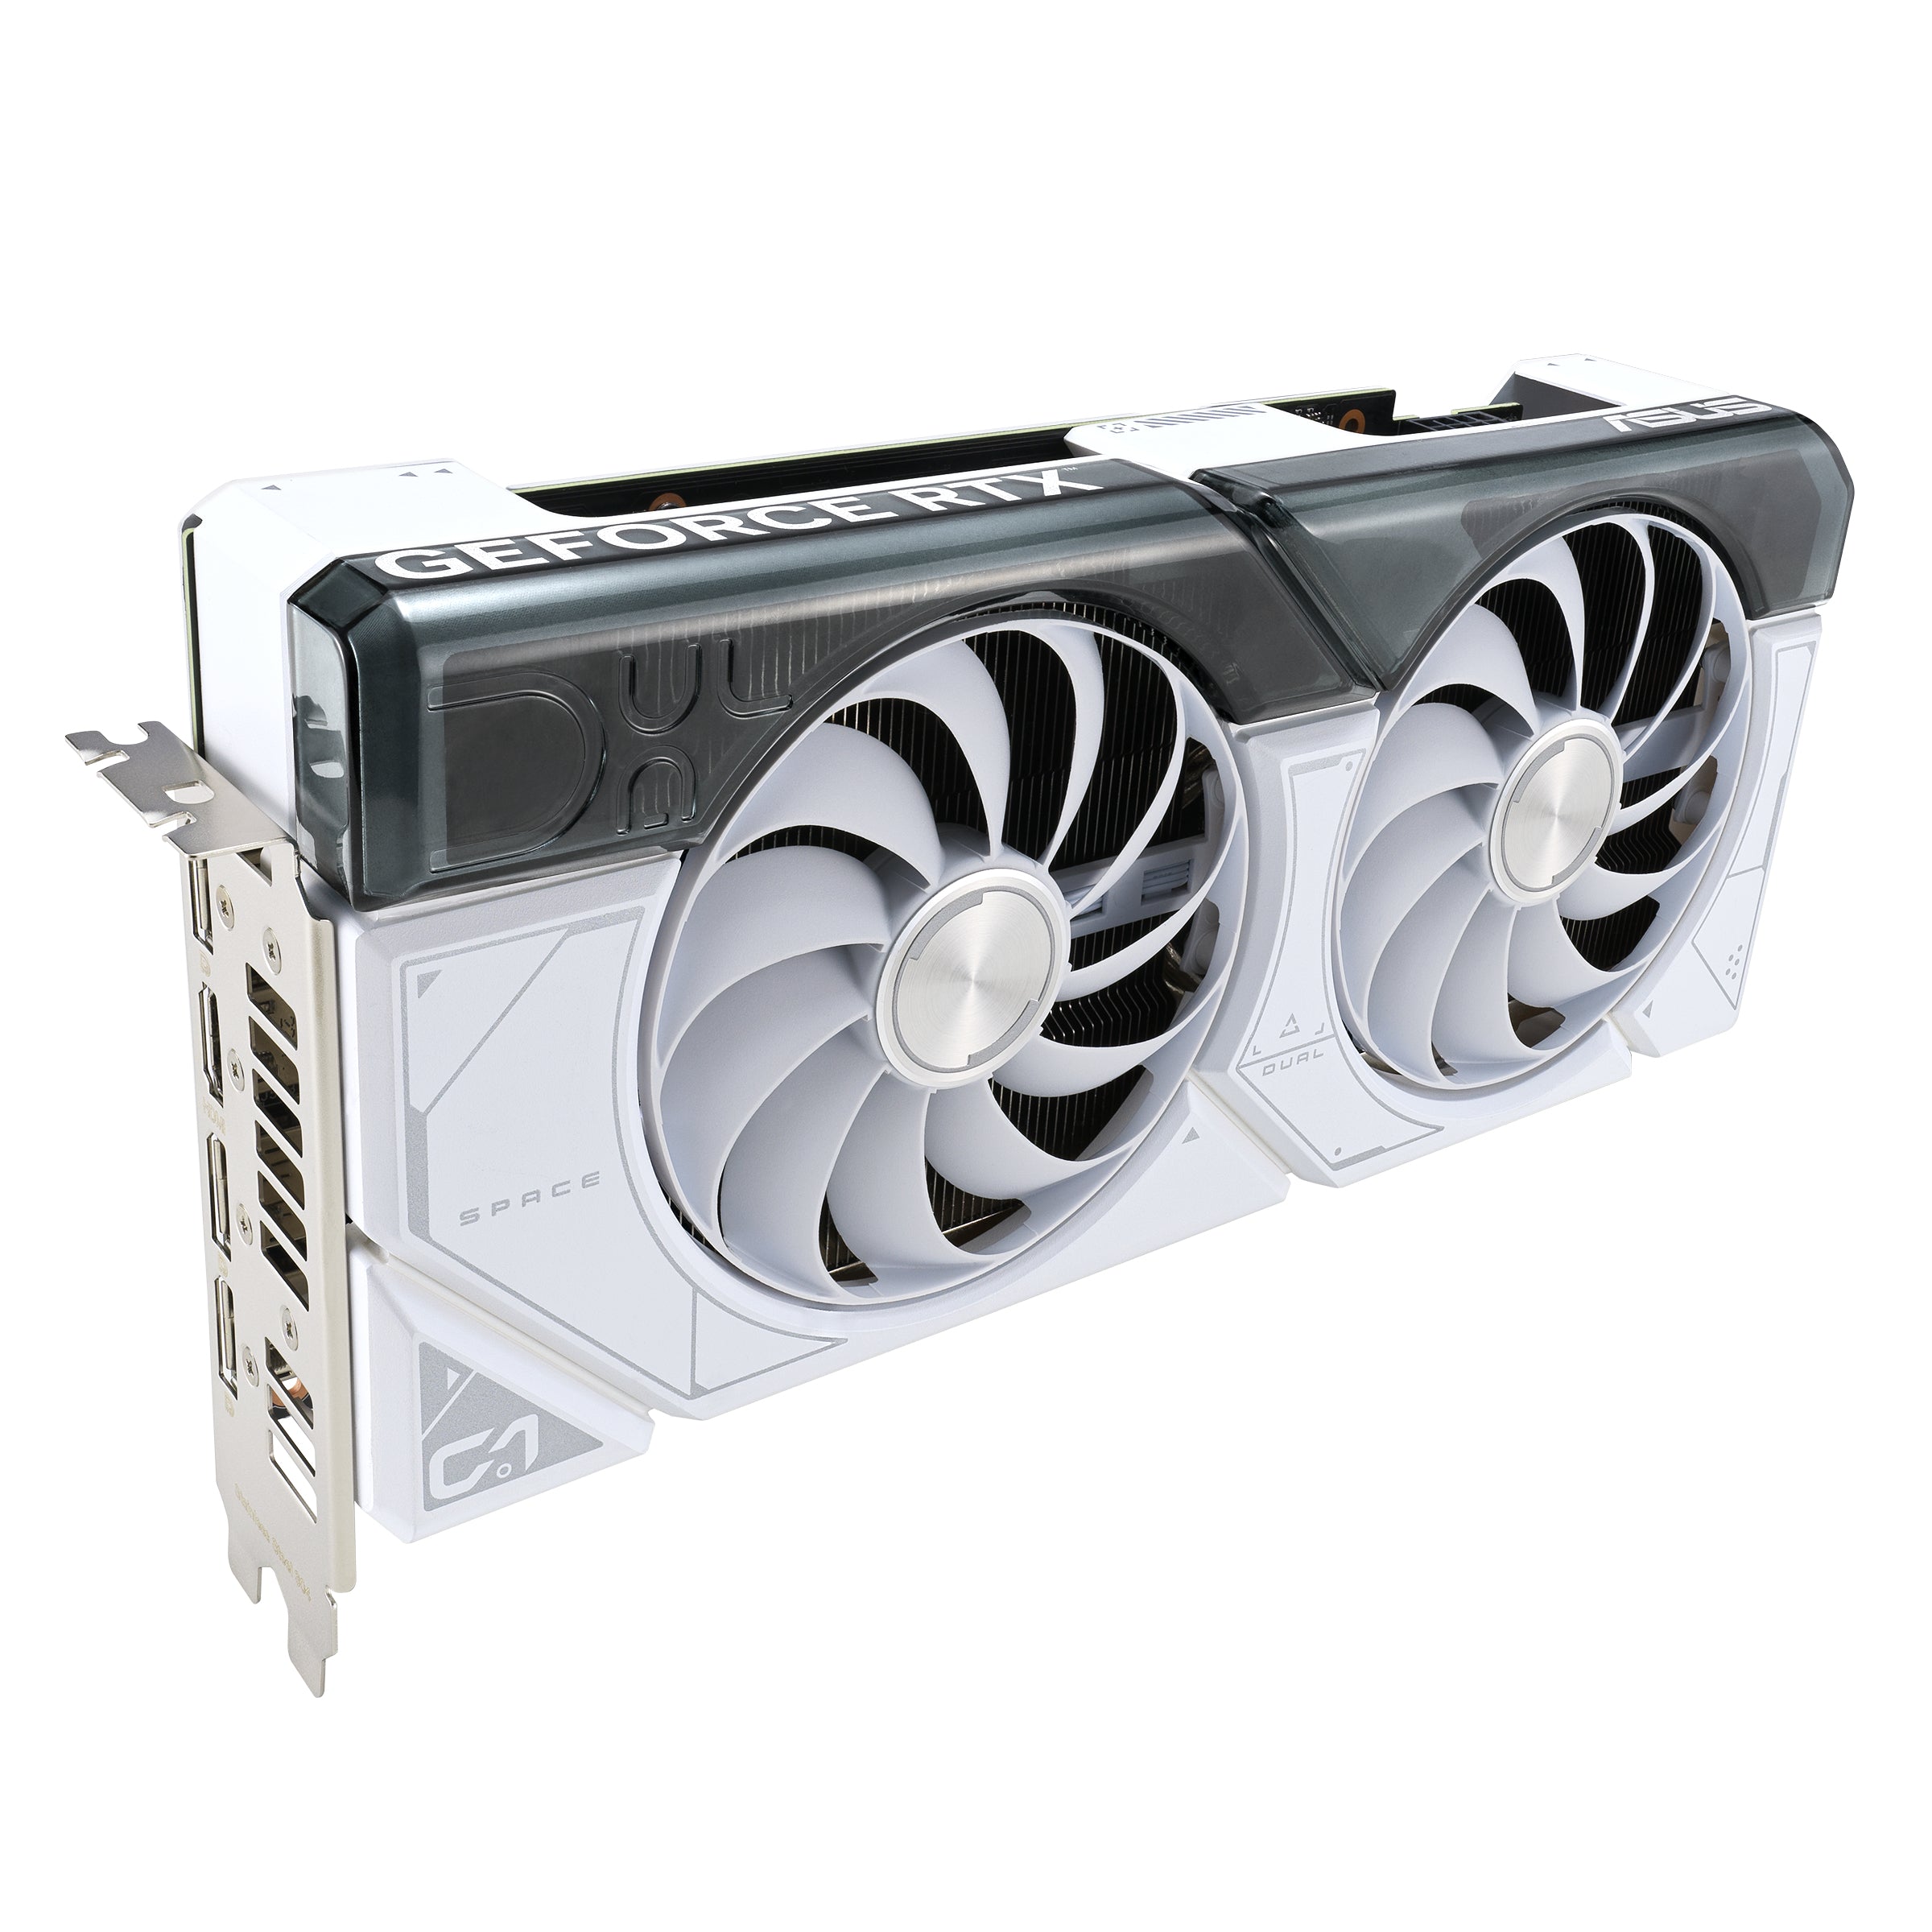 ASUS GeForce RTX 4070 12GB DUAL OC WHITE EDITION